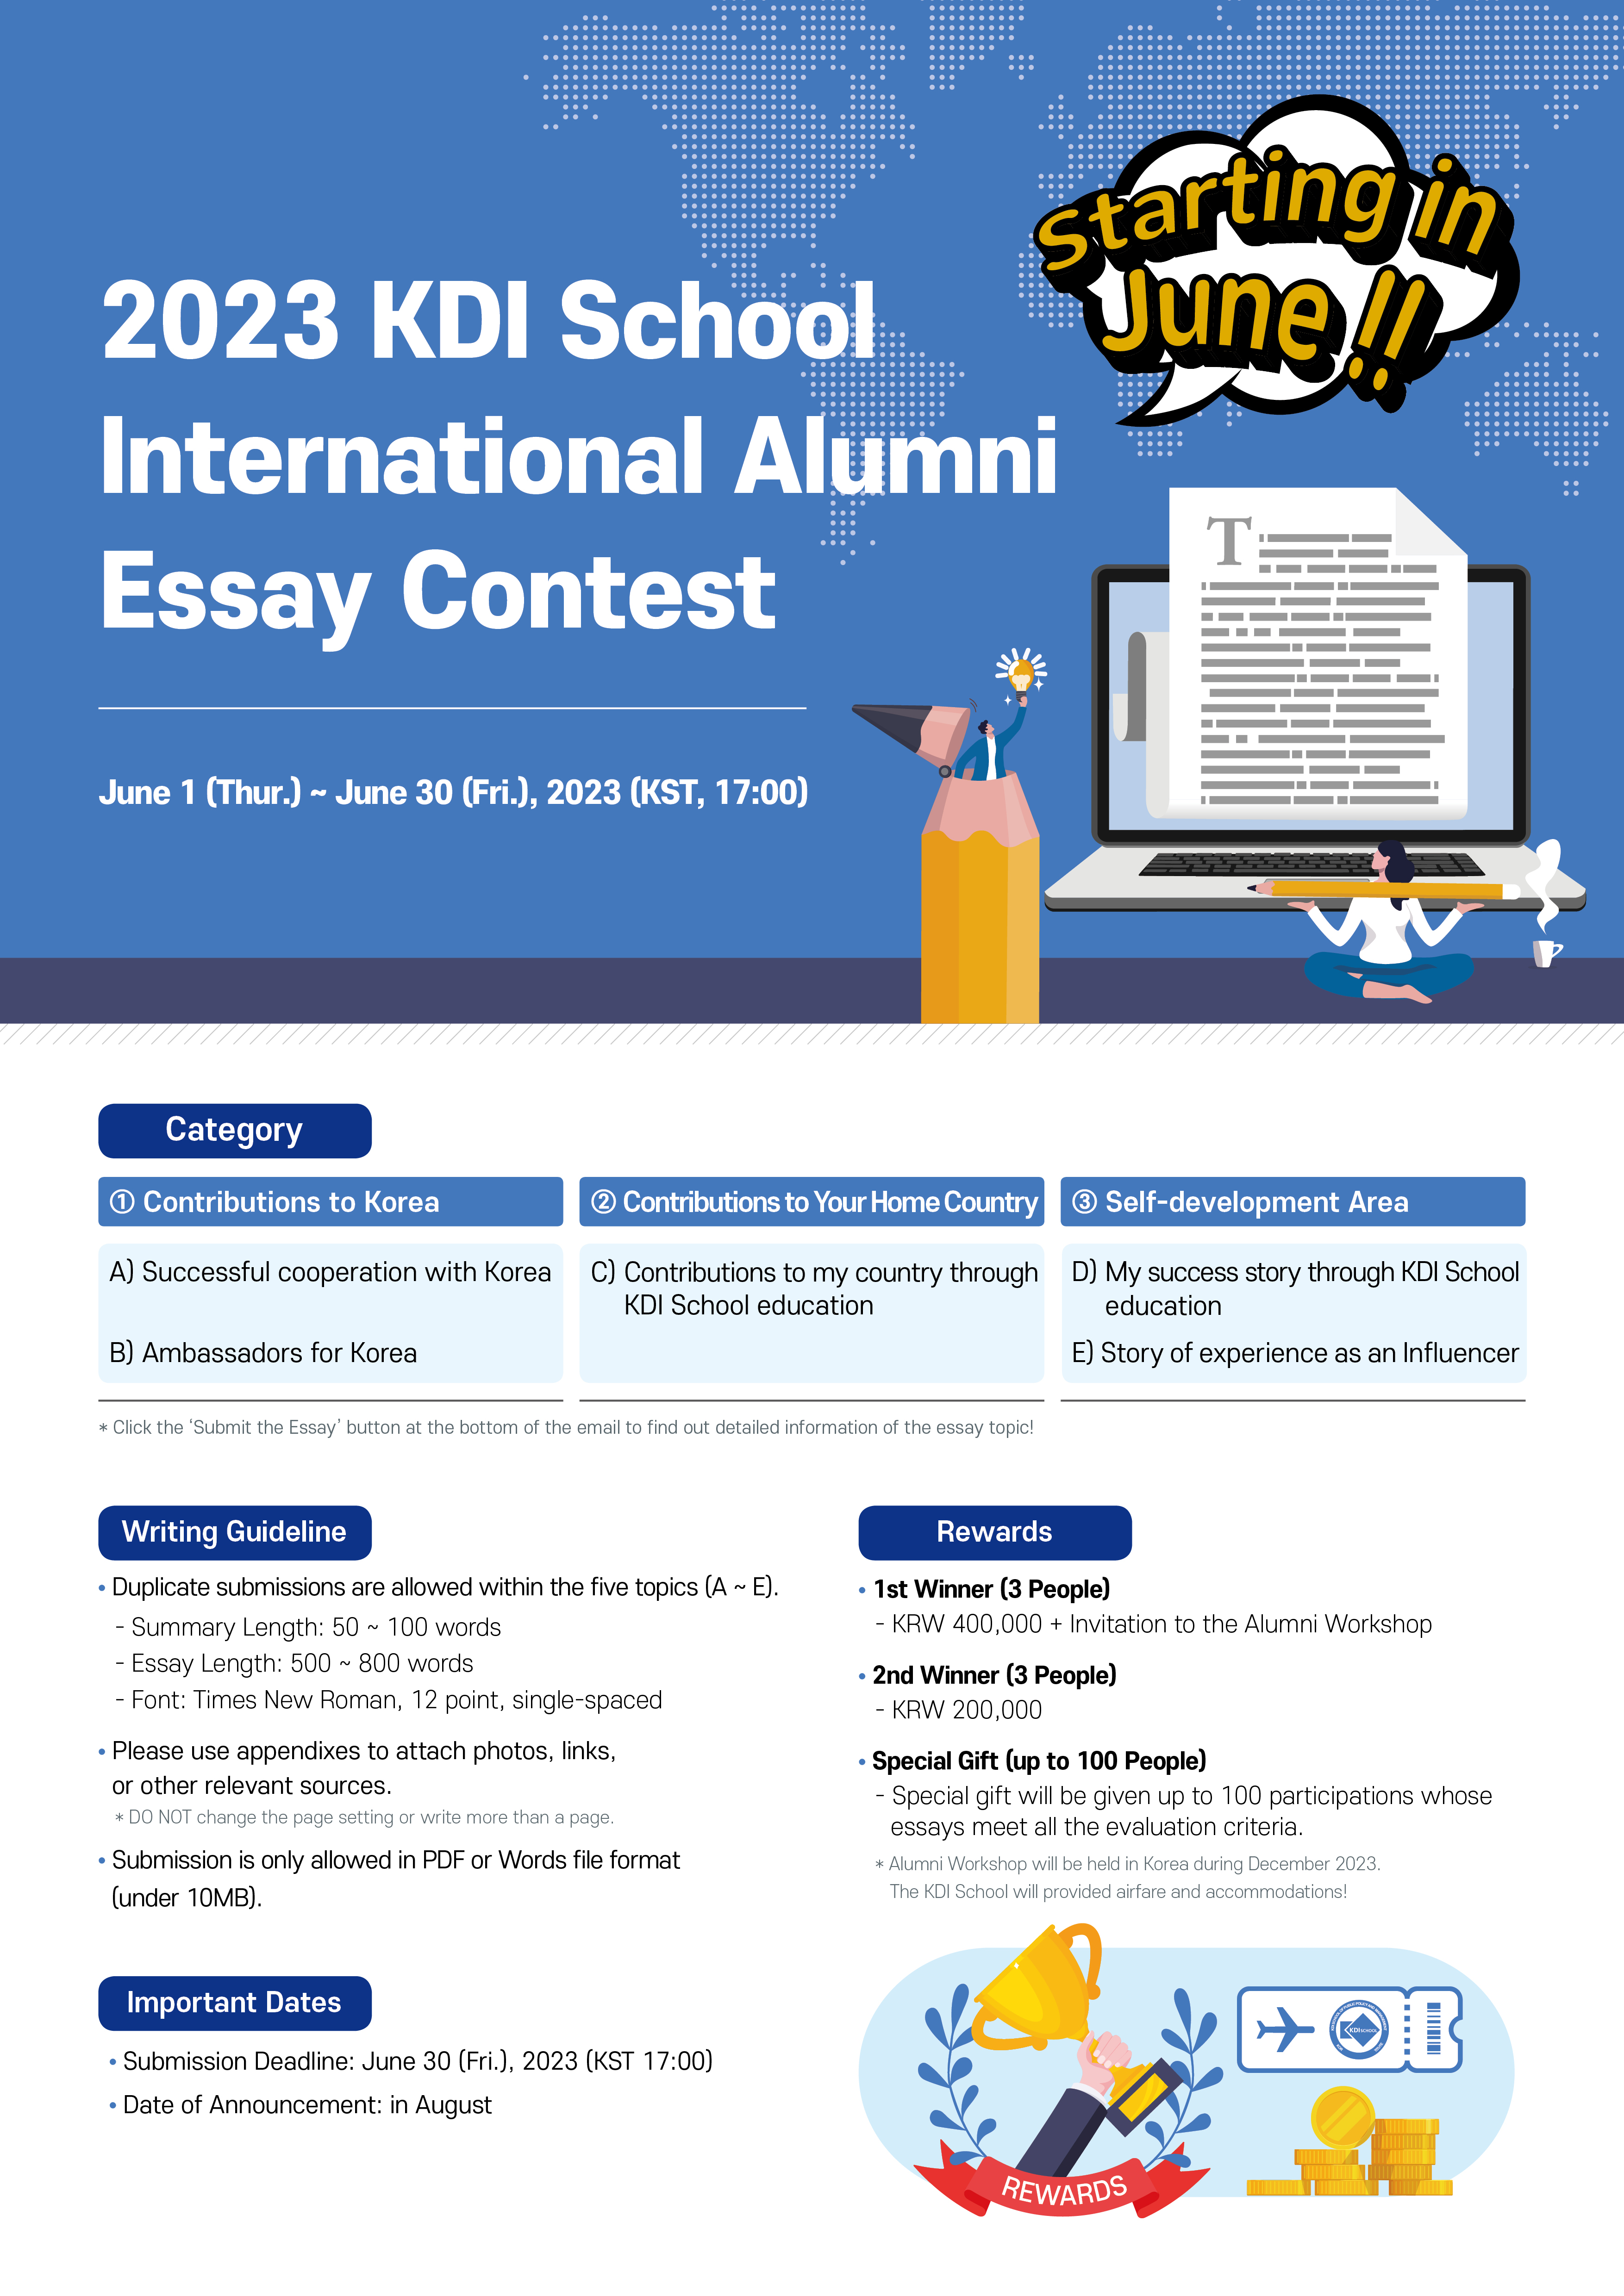 Participate in The 2023 KDI School International Alumni Essay Contest (Starting in June!)